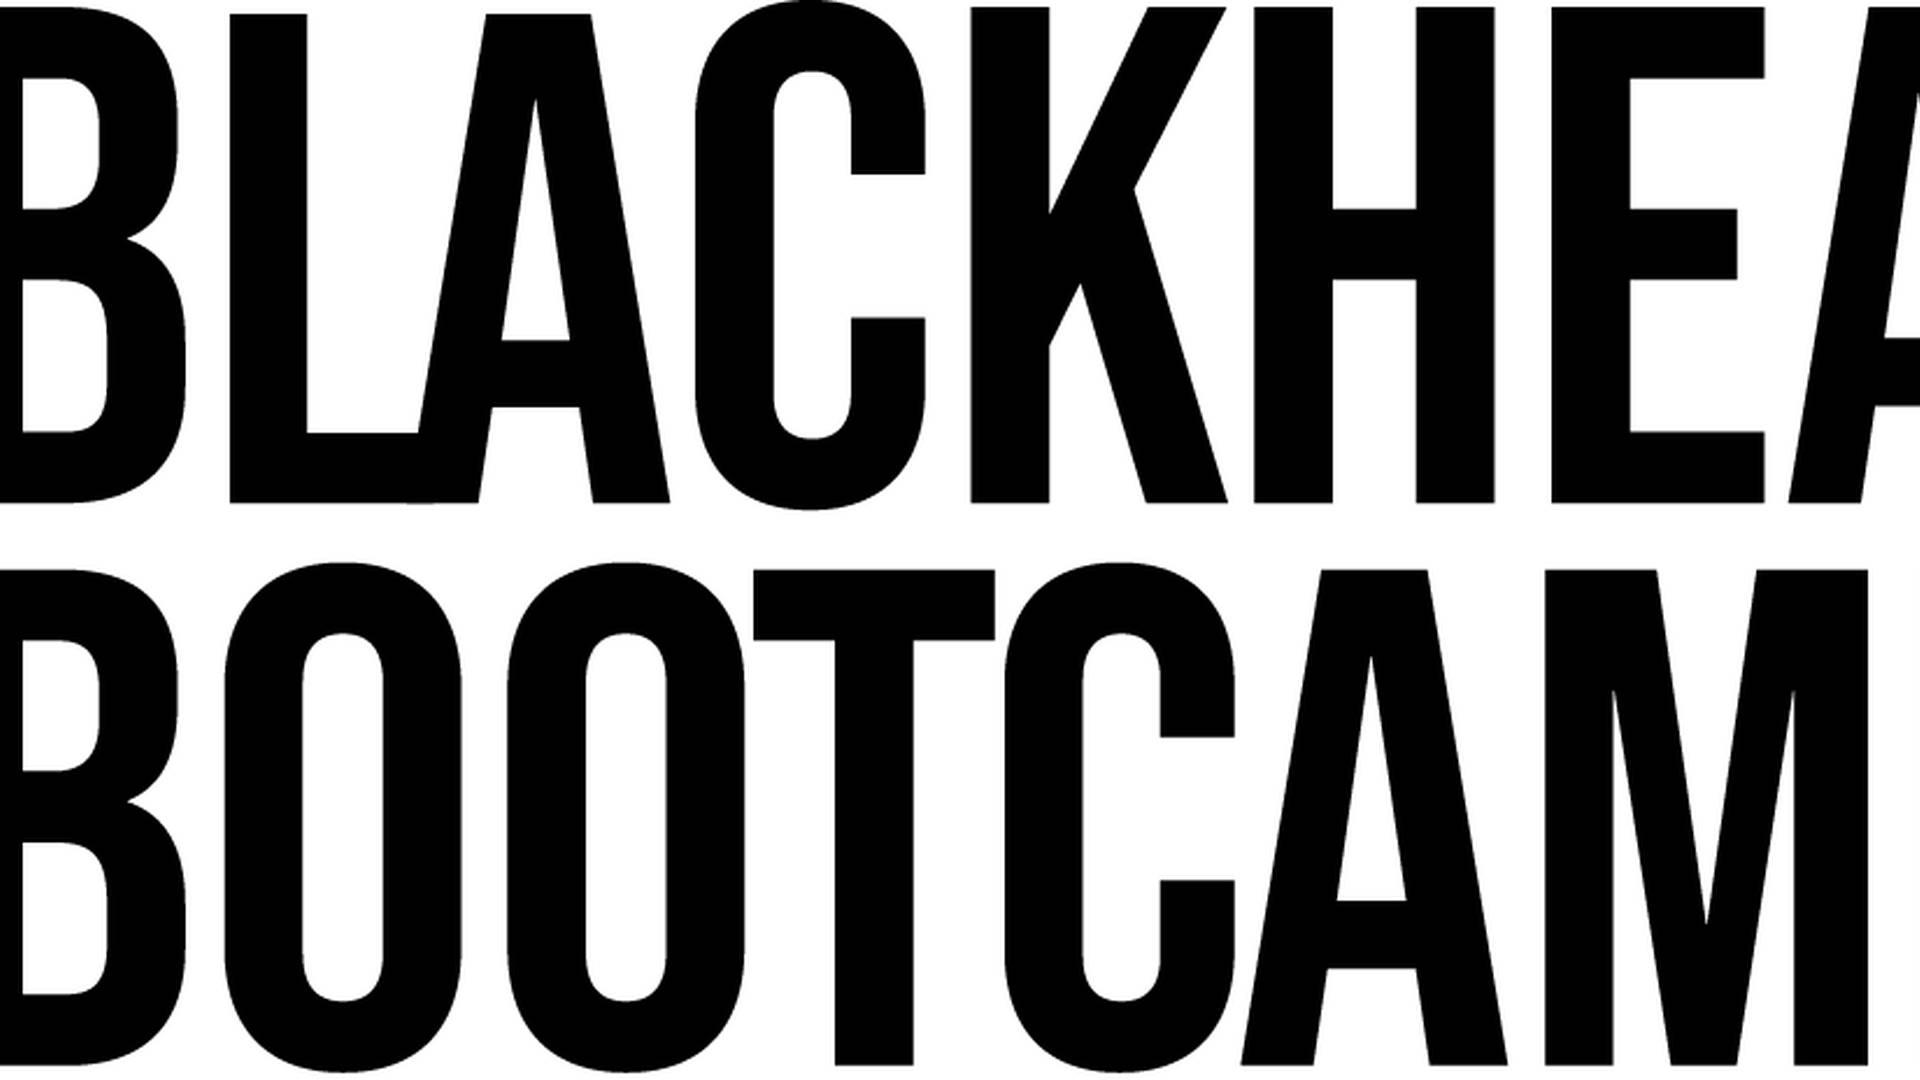 Blackheath Bootcamp photo